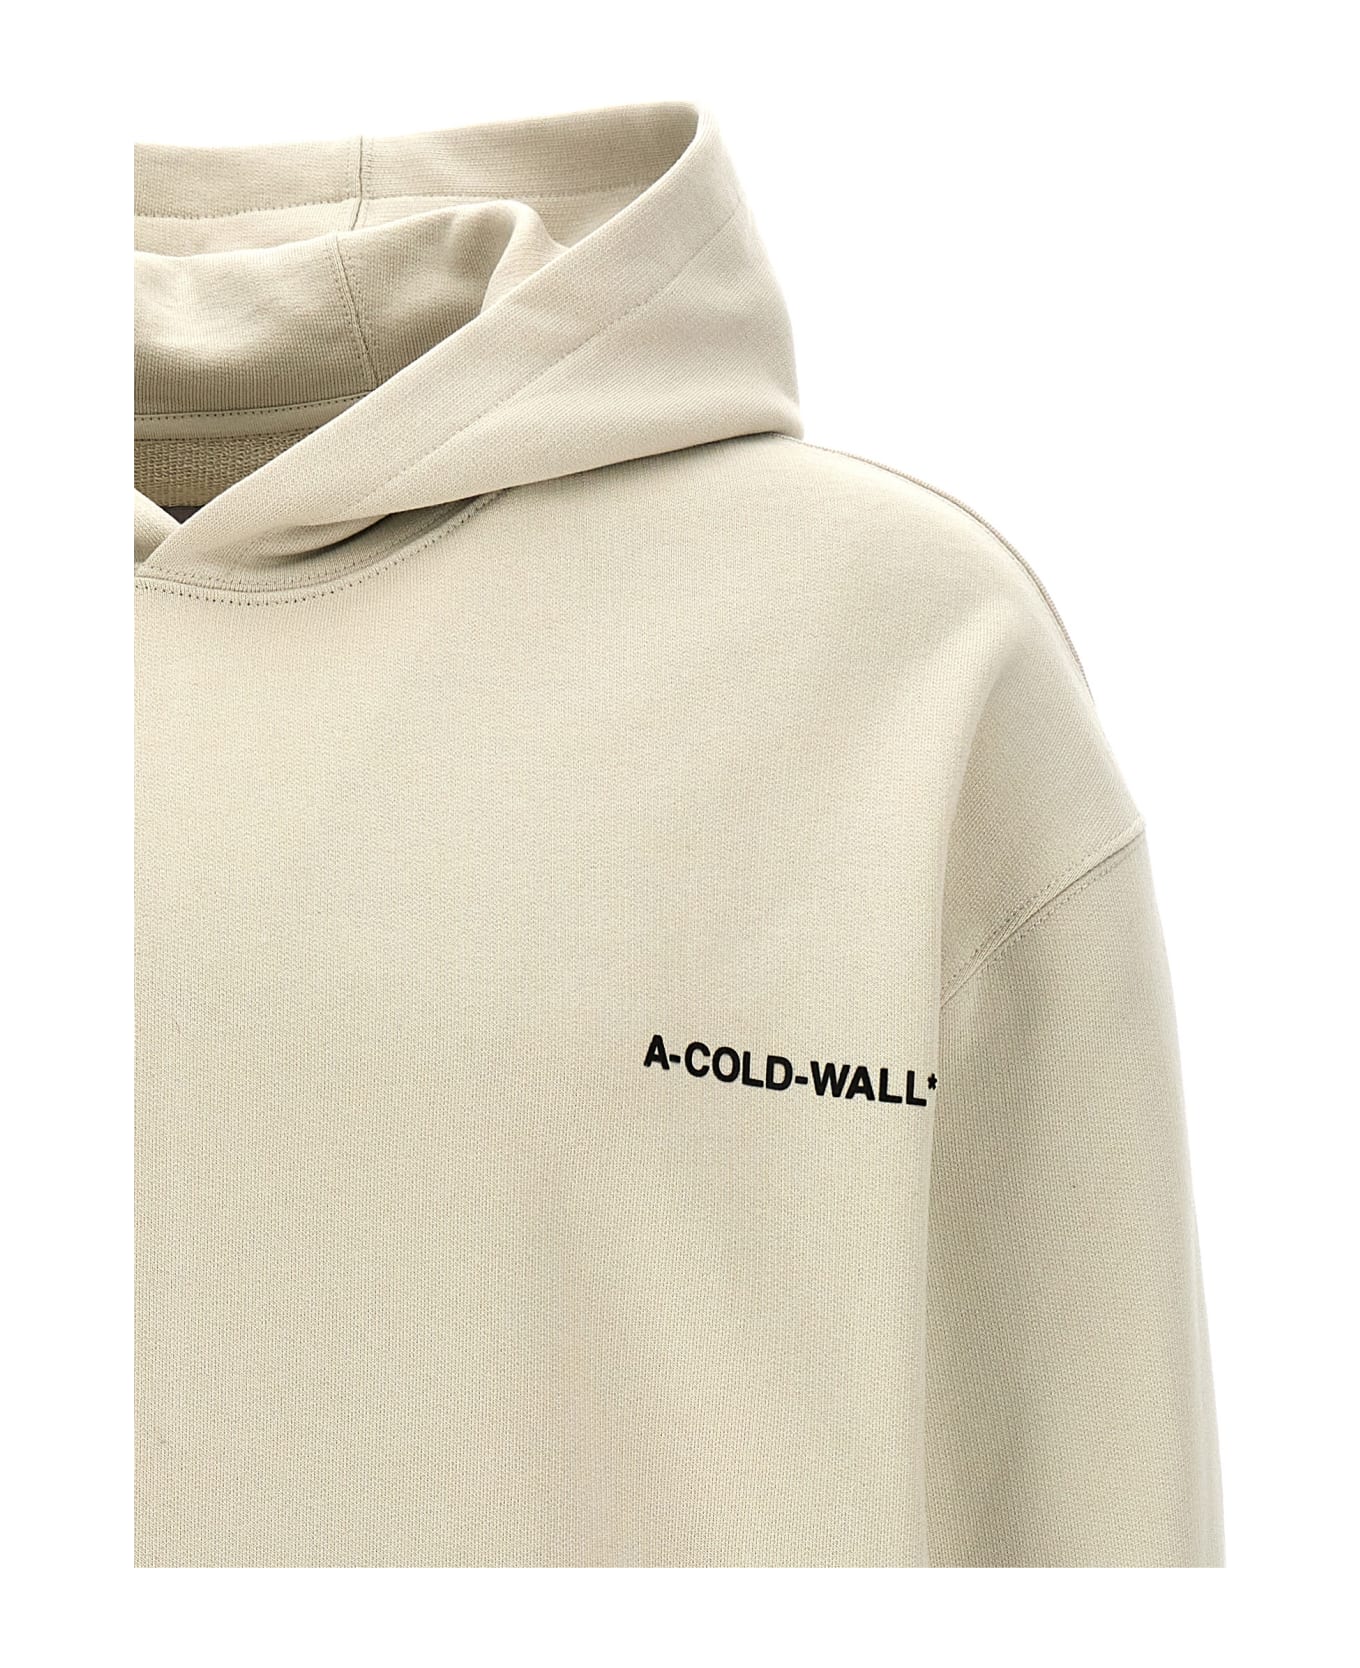 A-COLD-WALL 'essential Small Logo' Hoodie Fleece - BONE